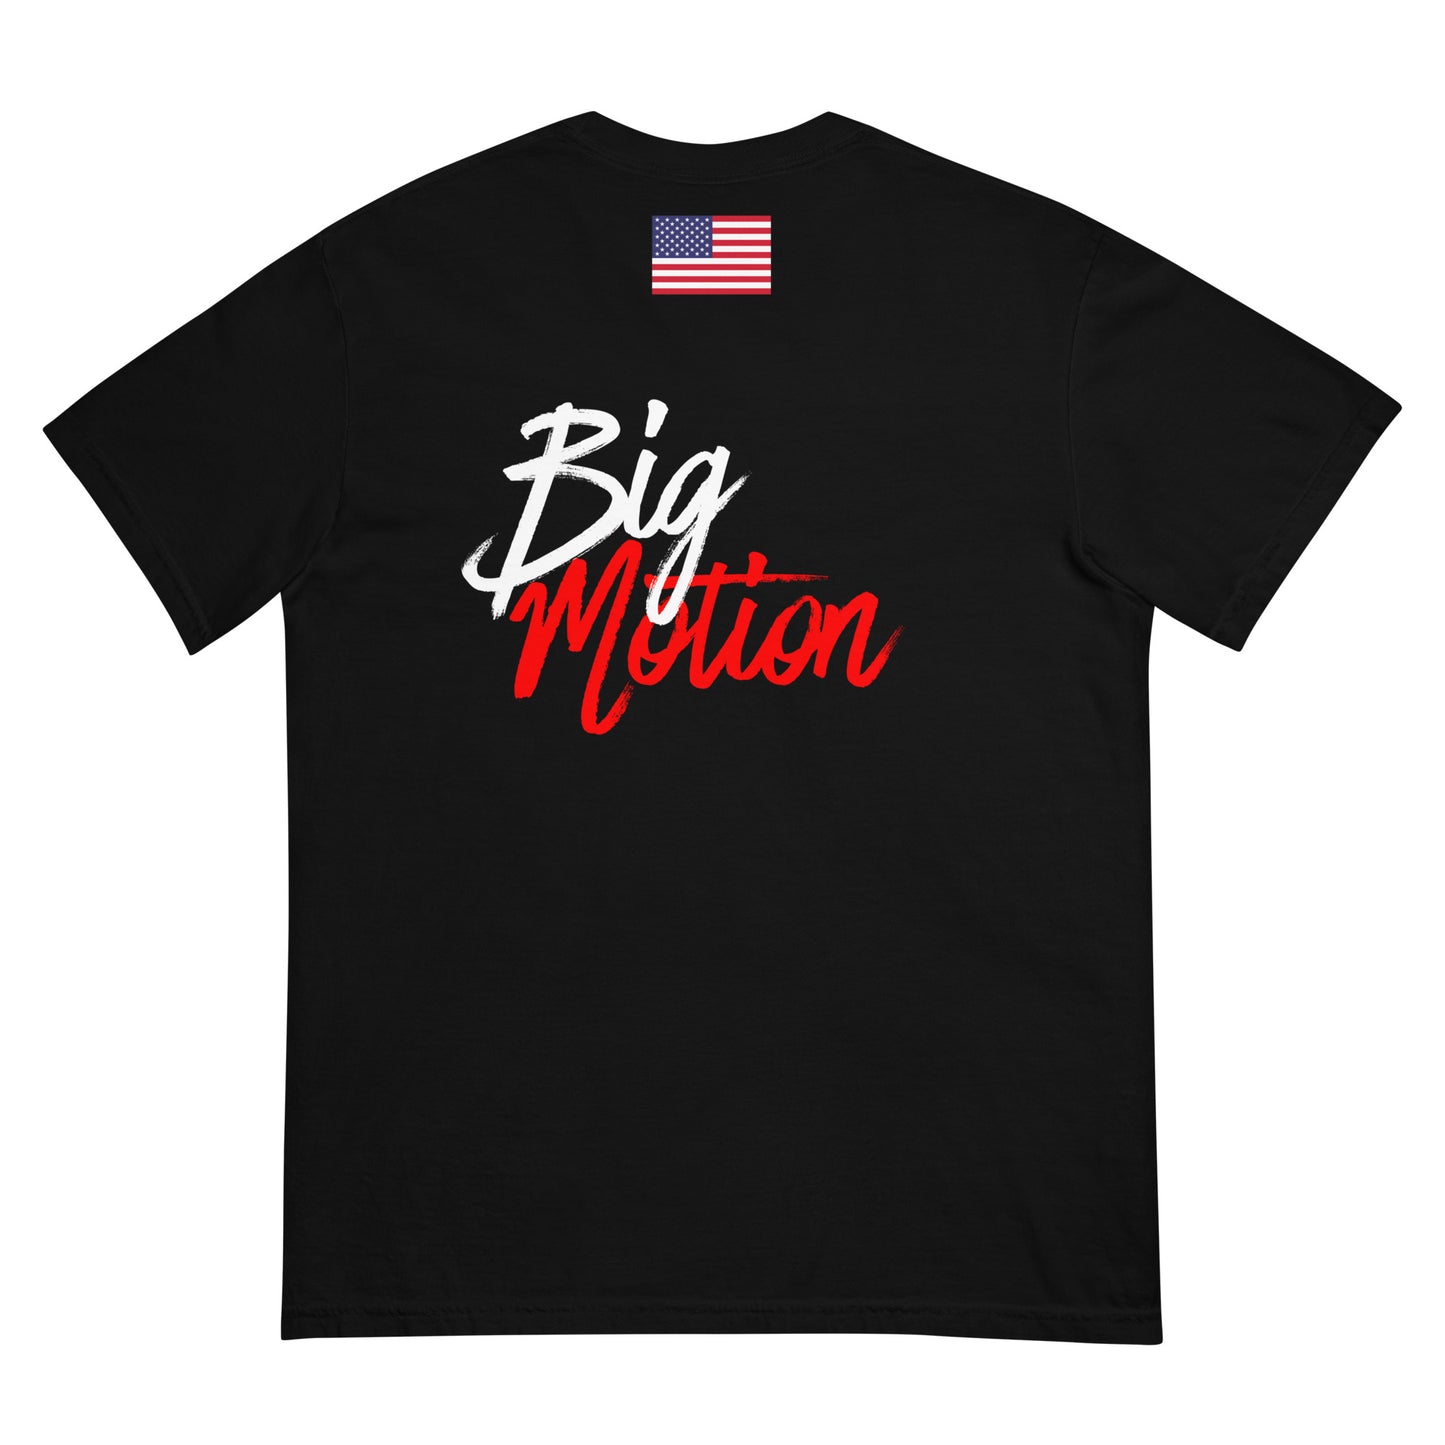 BigSmoke Soprano Clothing: BigSmoke Soprano Worldwide Collection: Big Motion Tee (USA Edition)